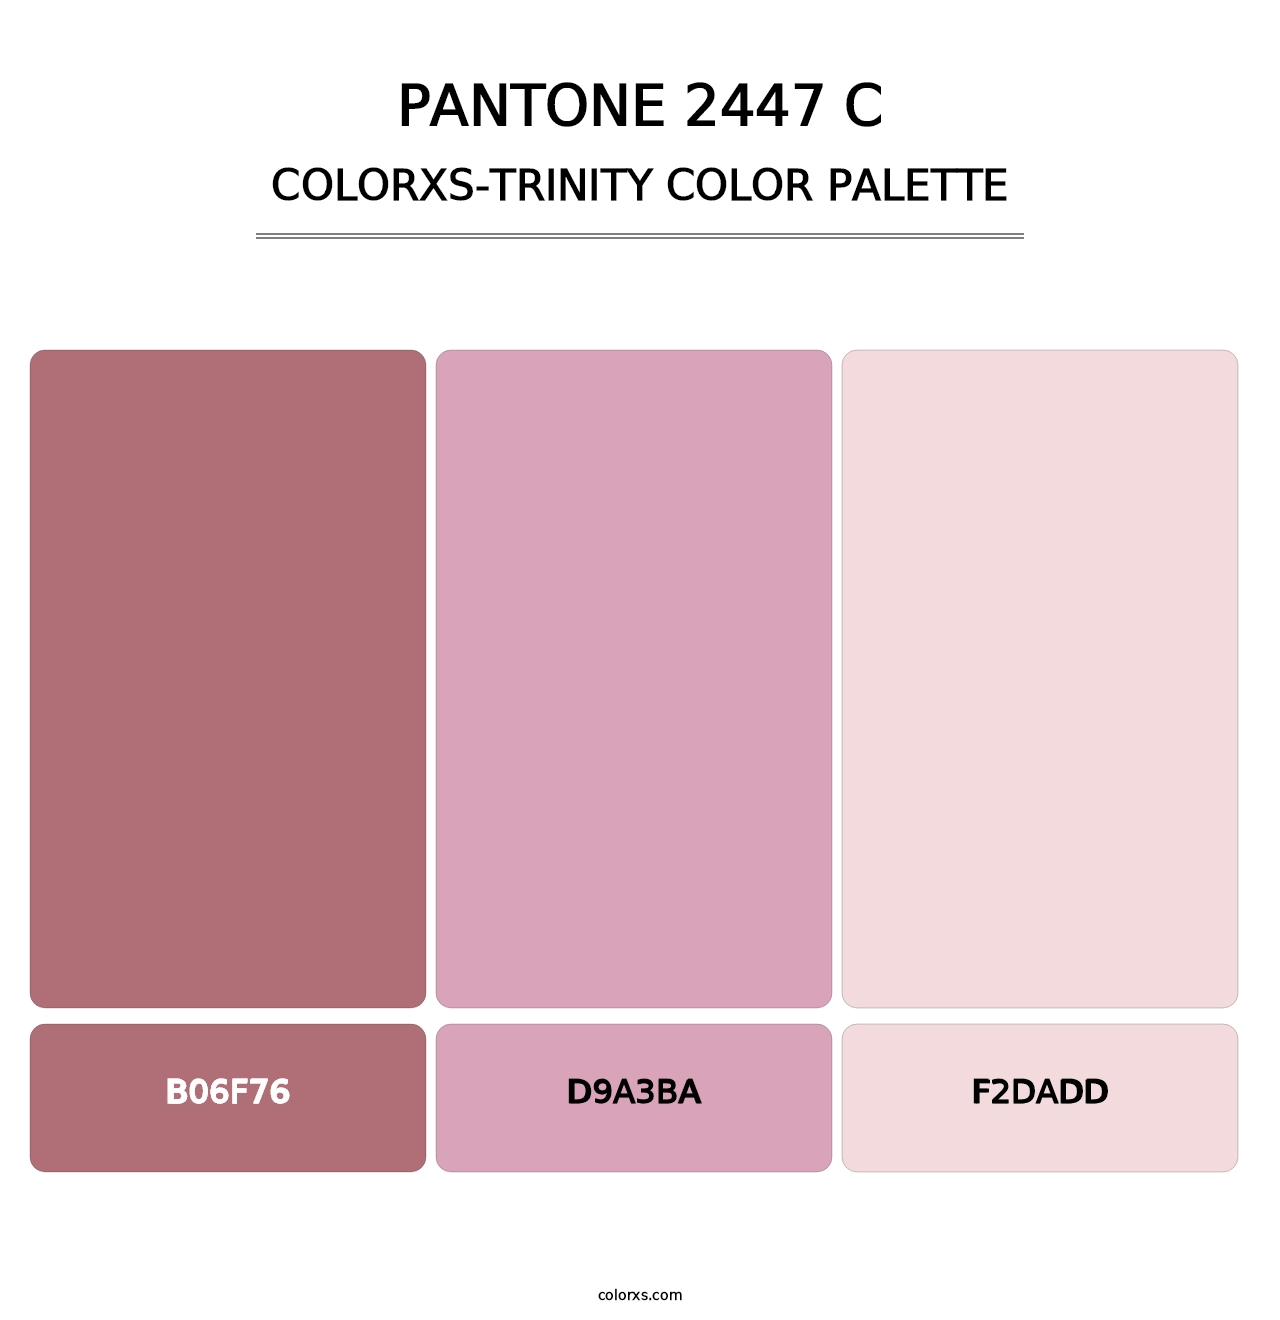 PANTONE 2447 C - Colorxs Trinity Palette